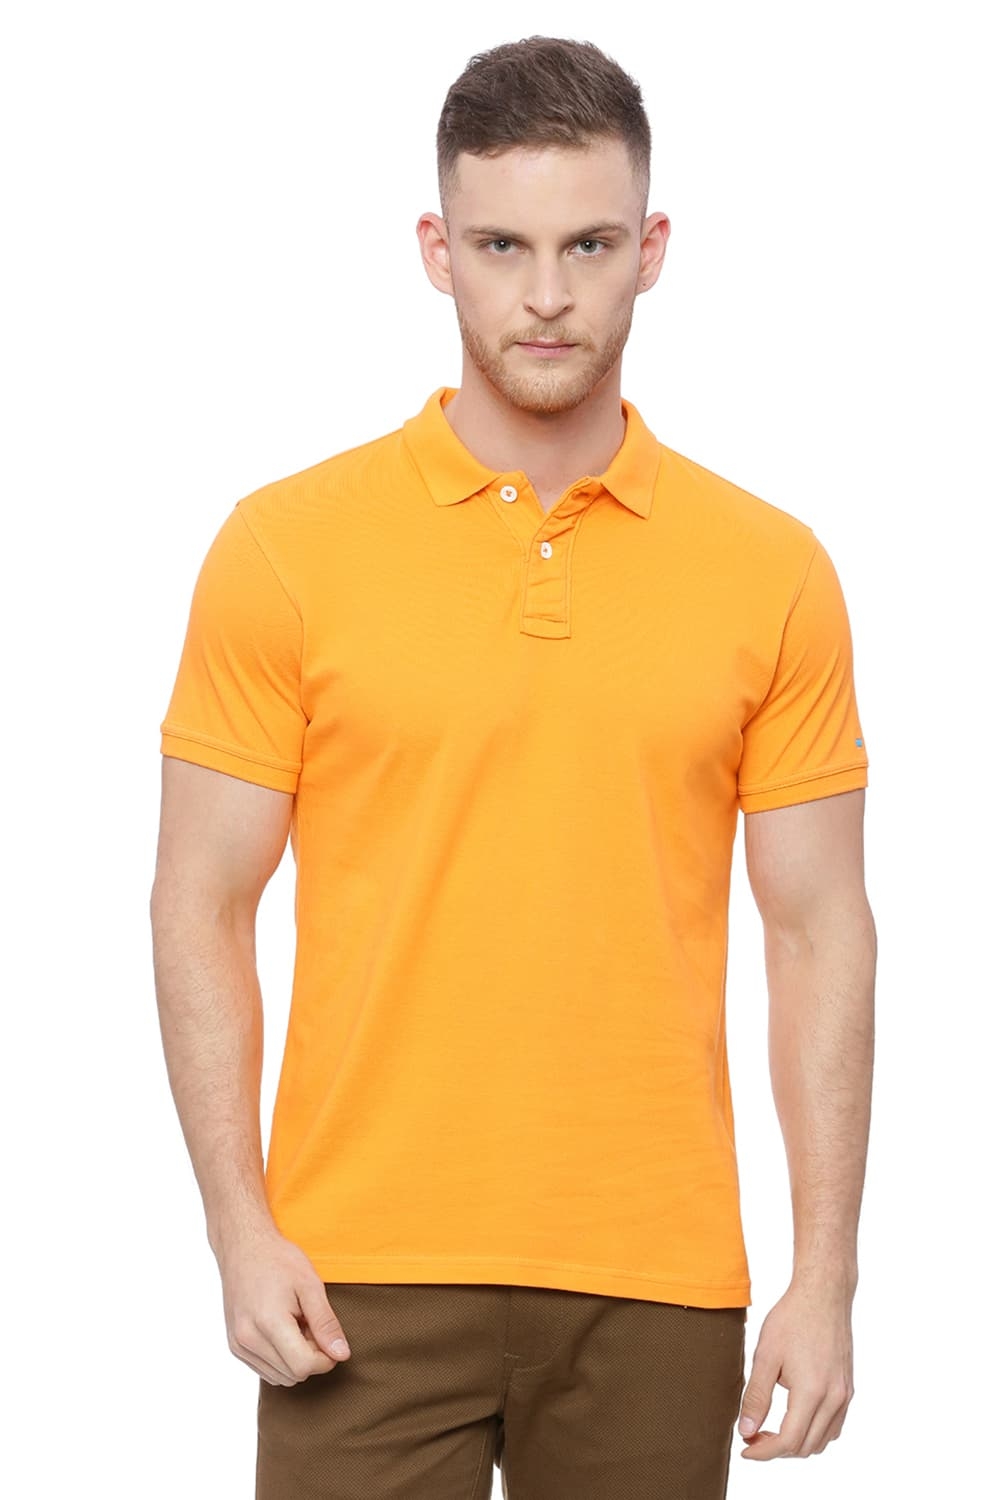 Basics | Basics Muscle Fit Mandarin Orange Polo T Shirt-18BTS41520